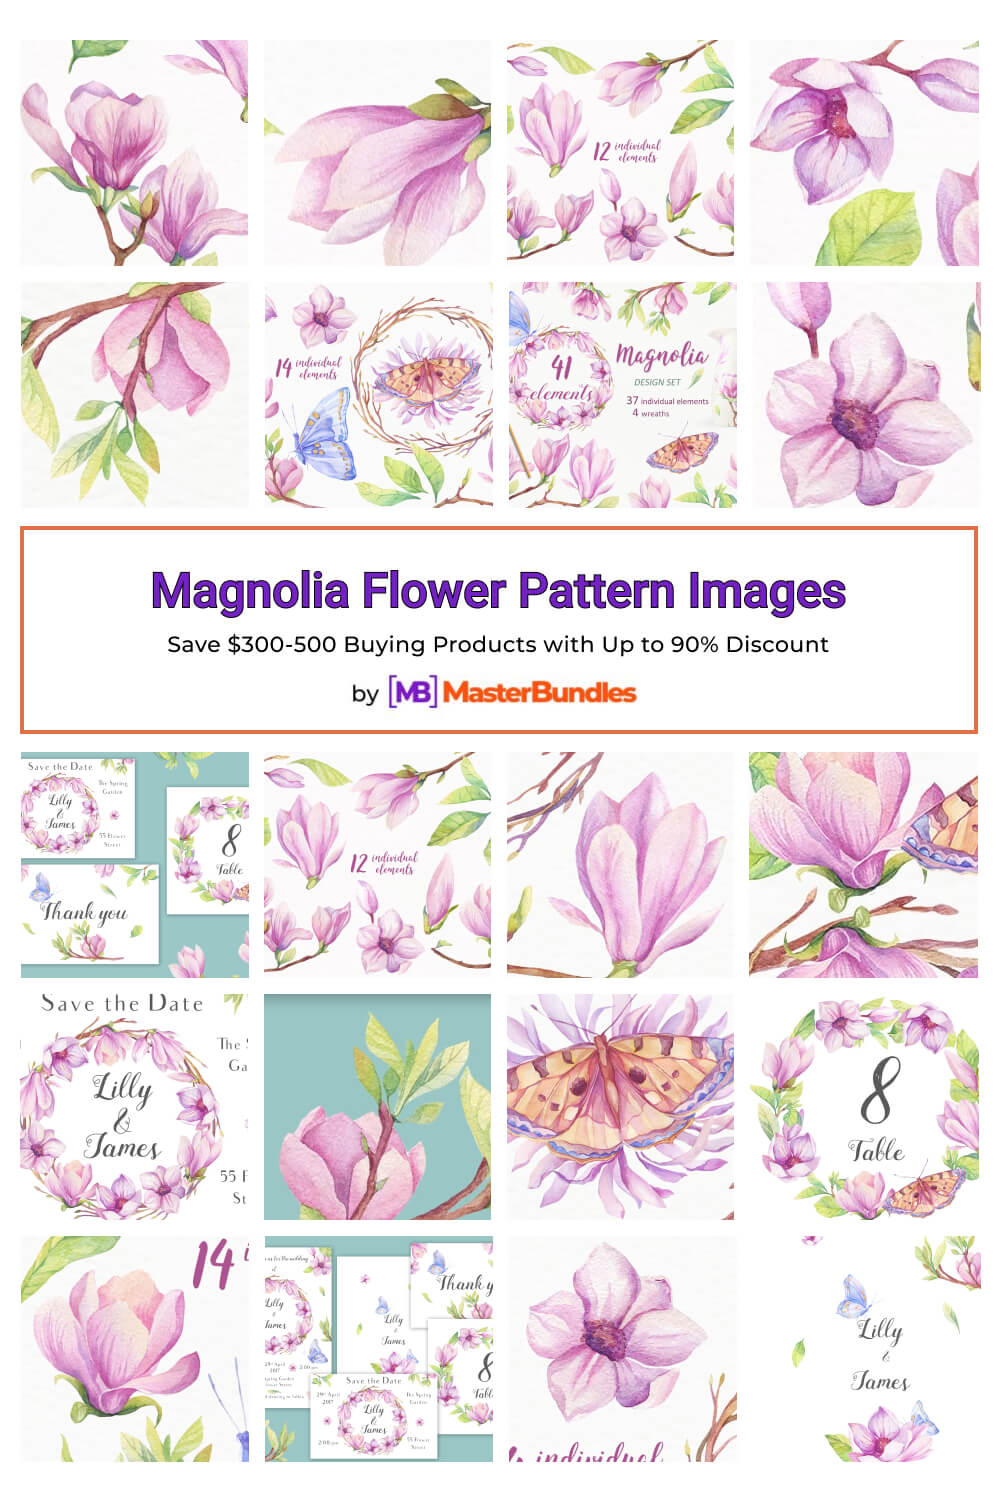 magnolia flower pattern images pinterest image.